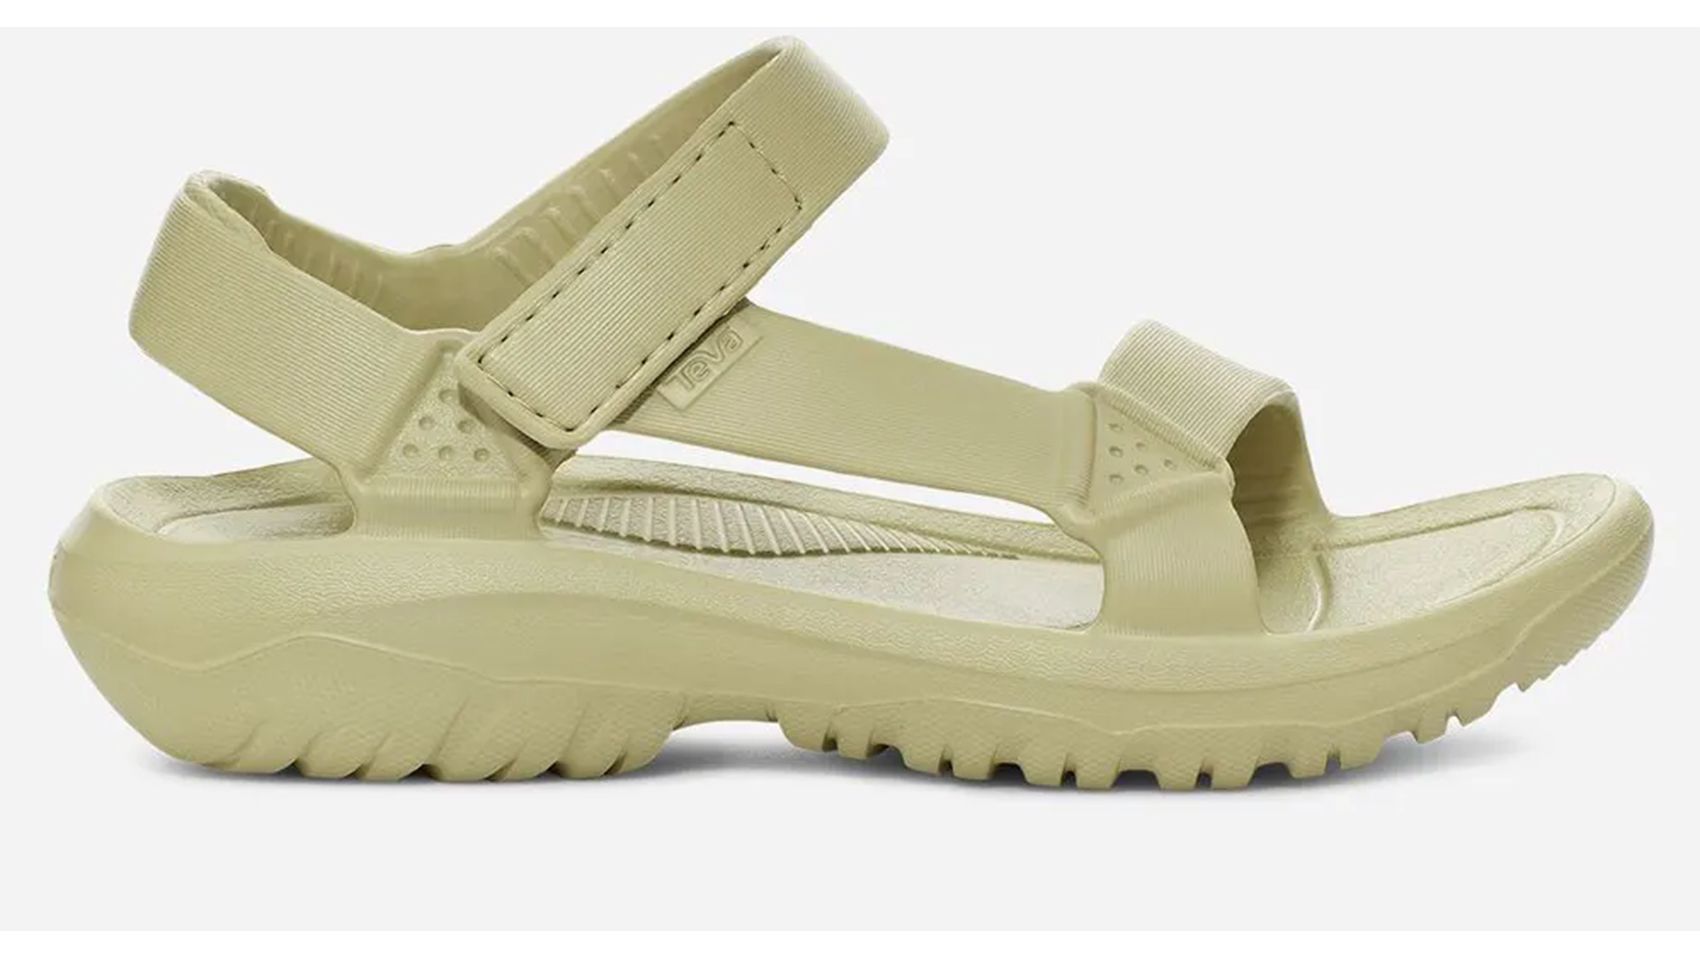 Tevas sandals that fashion editors love | CNN Underscored